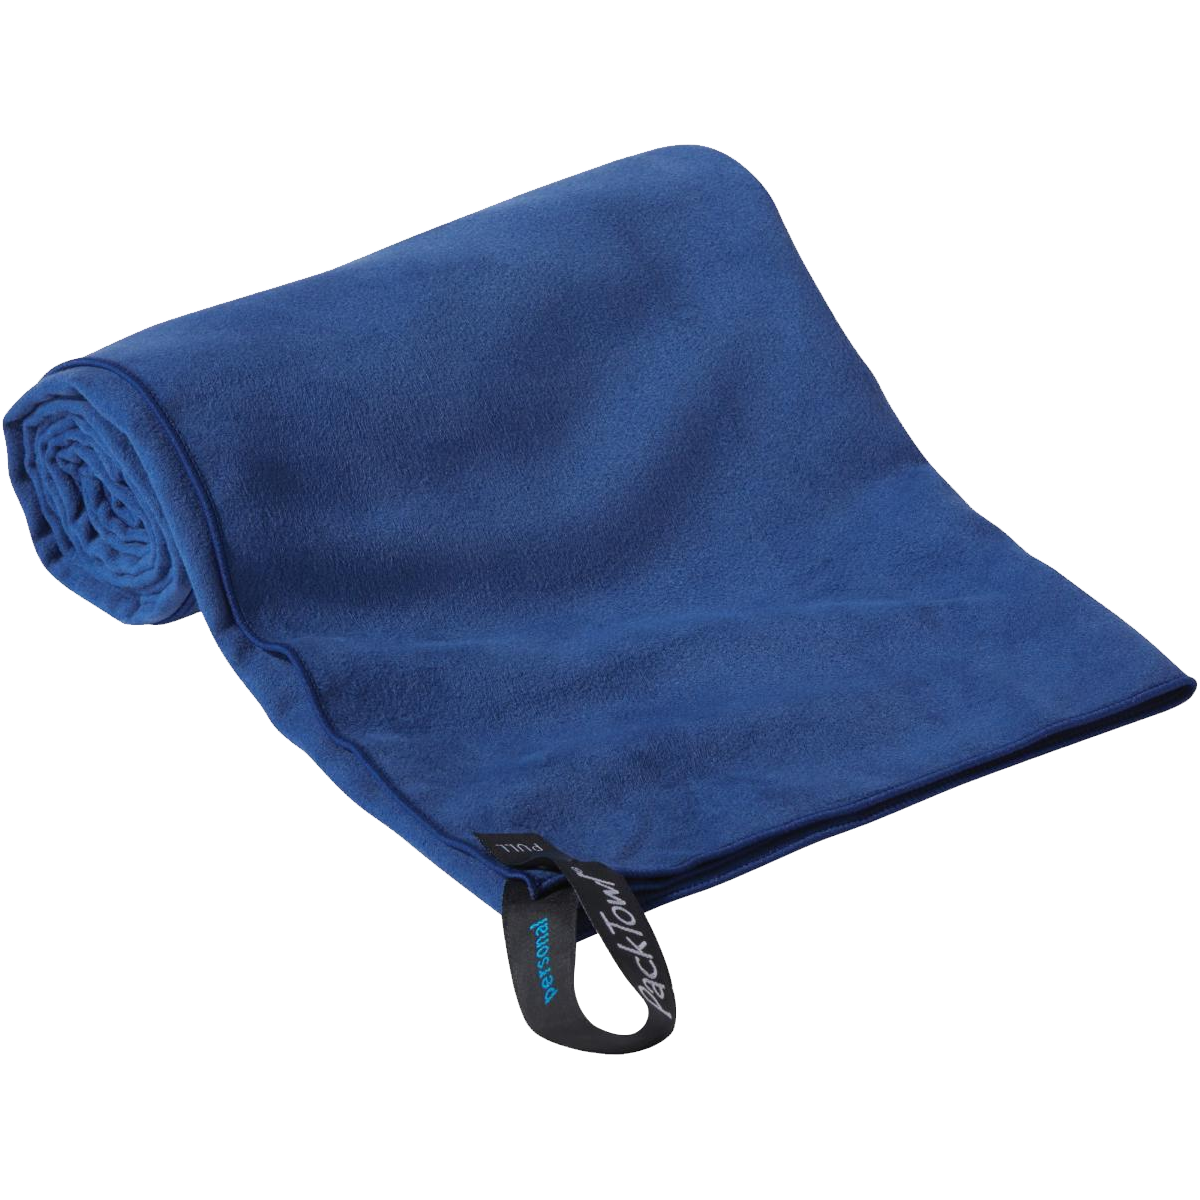 PackTowl Personal Body Towel alternate view